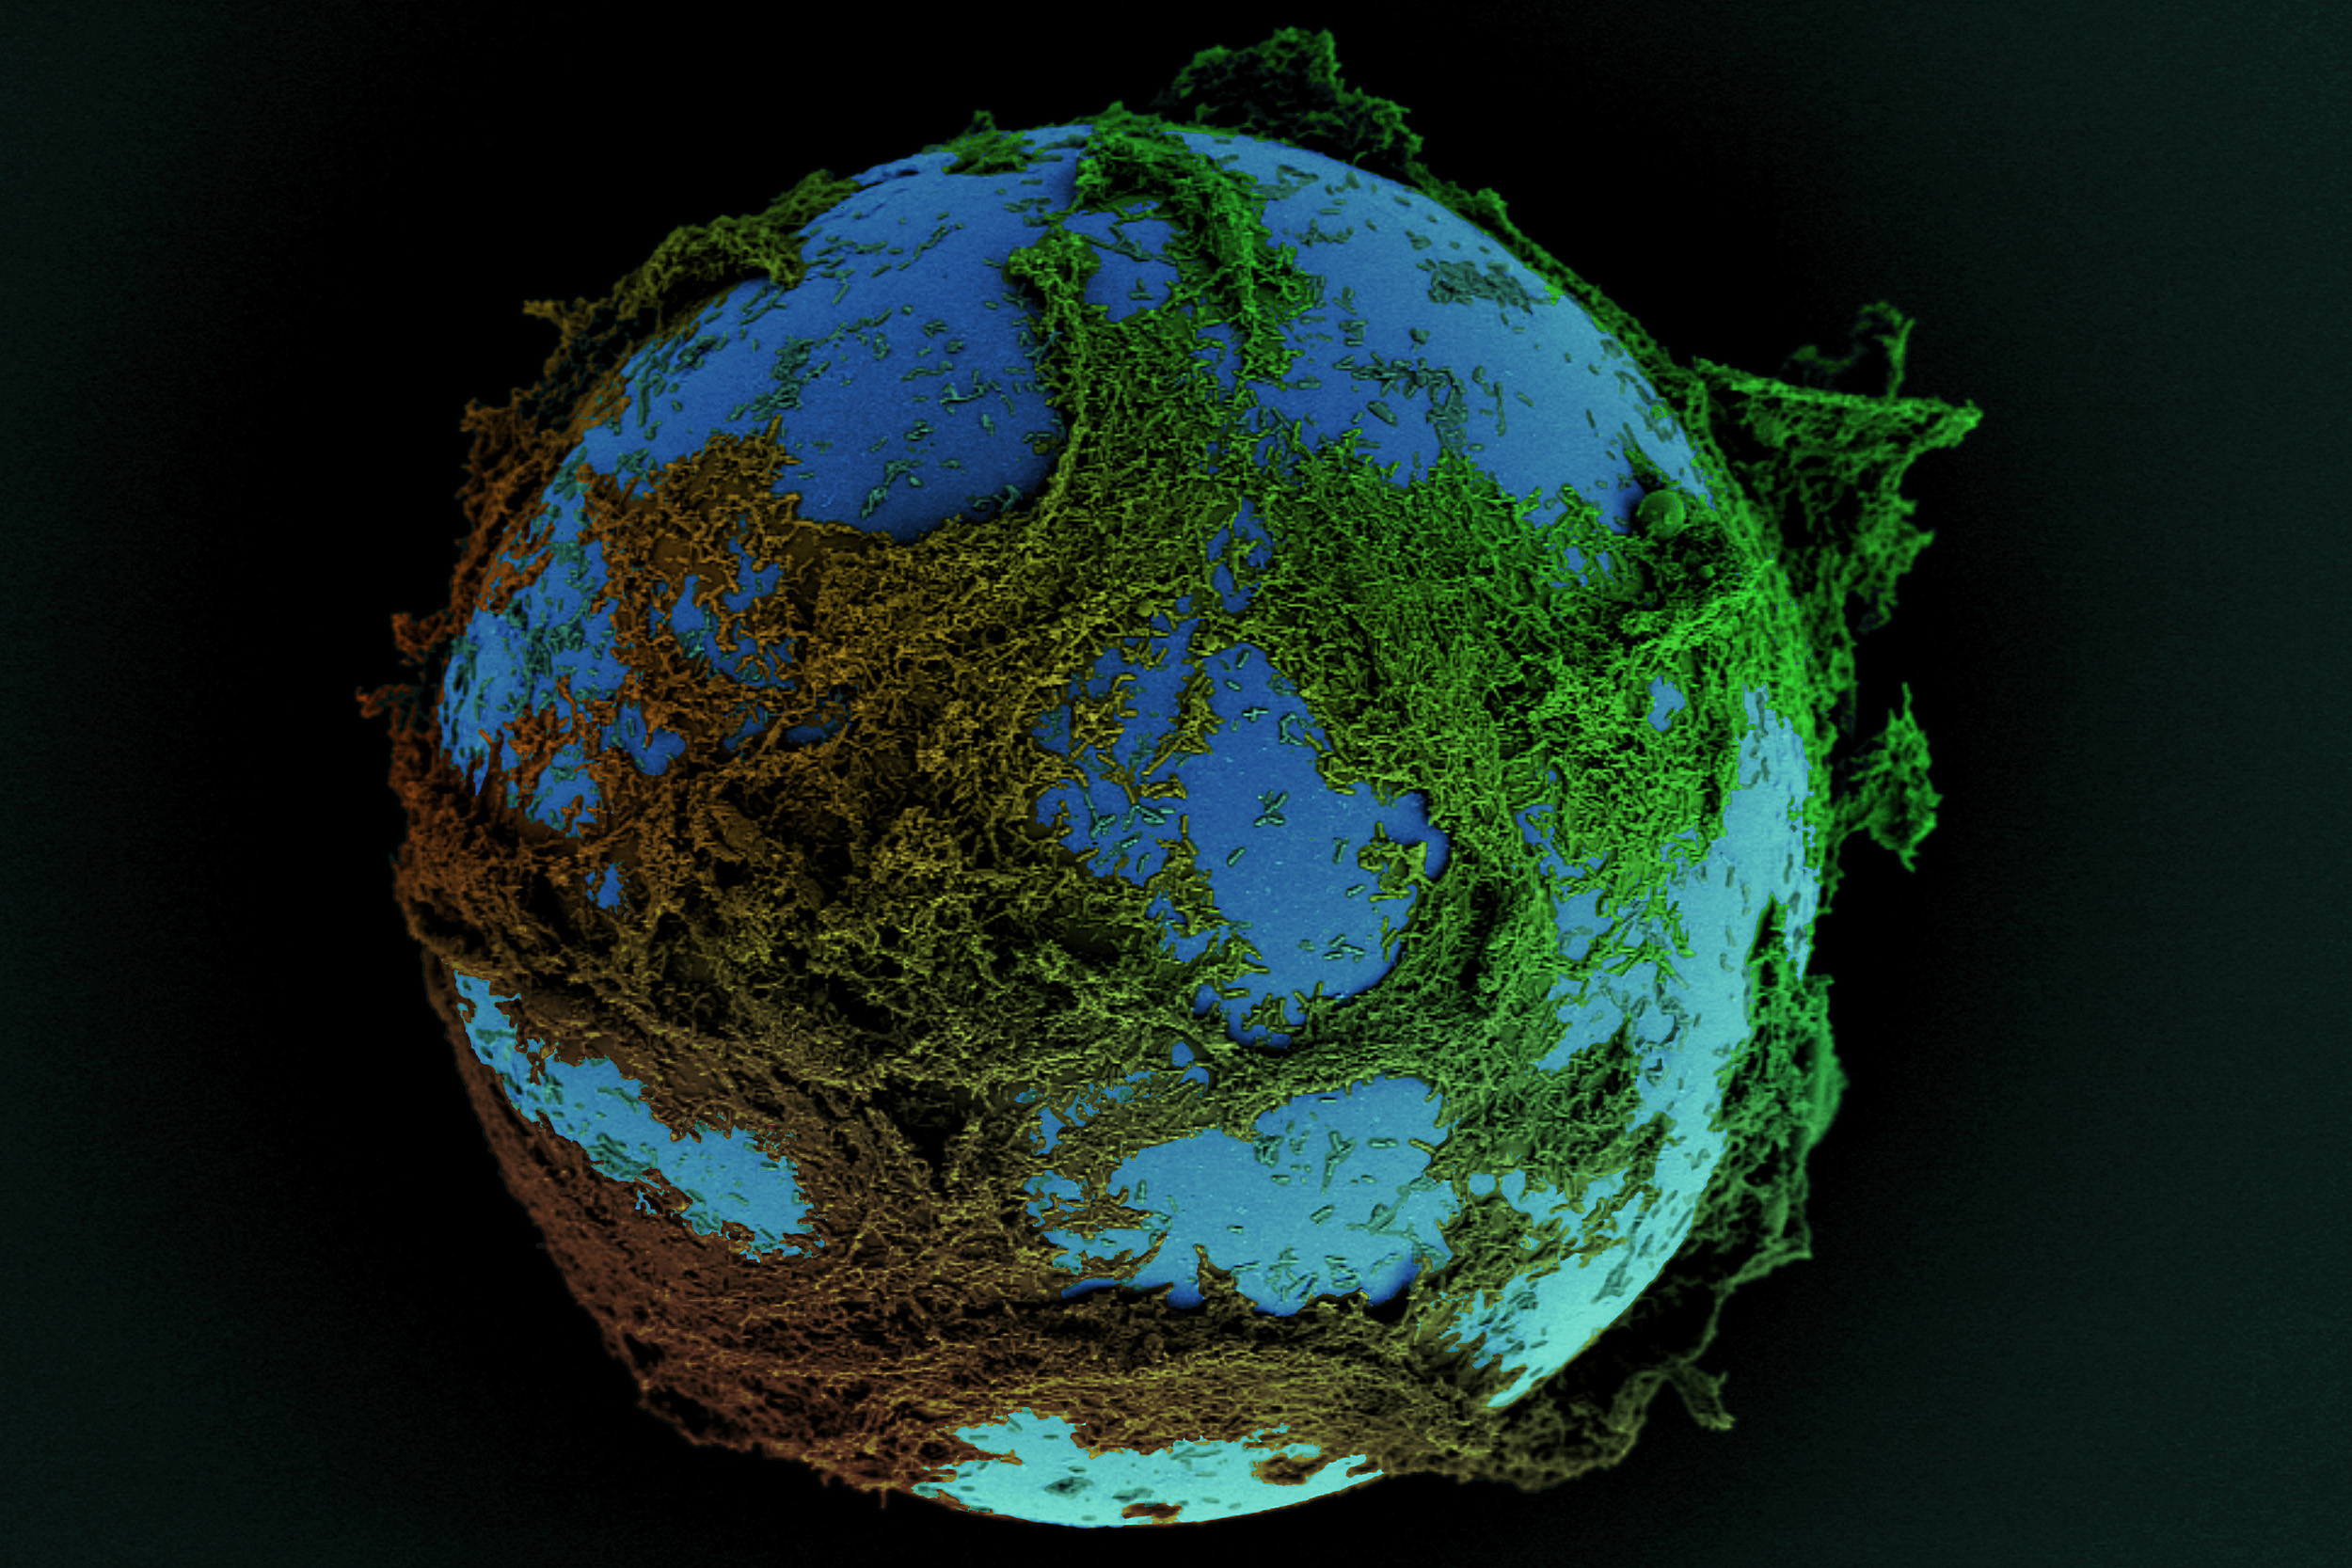 Biofilm resembles globe.